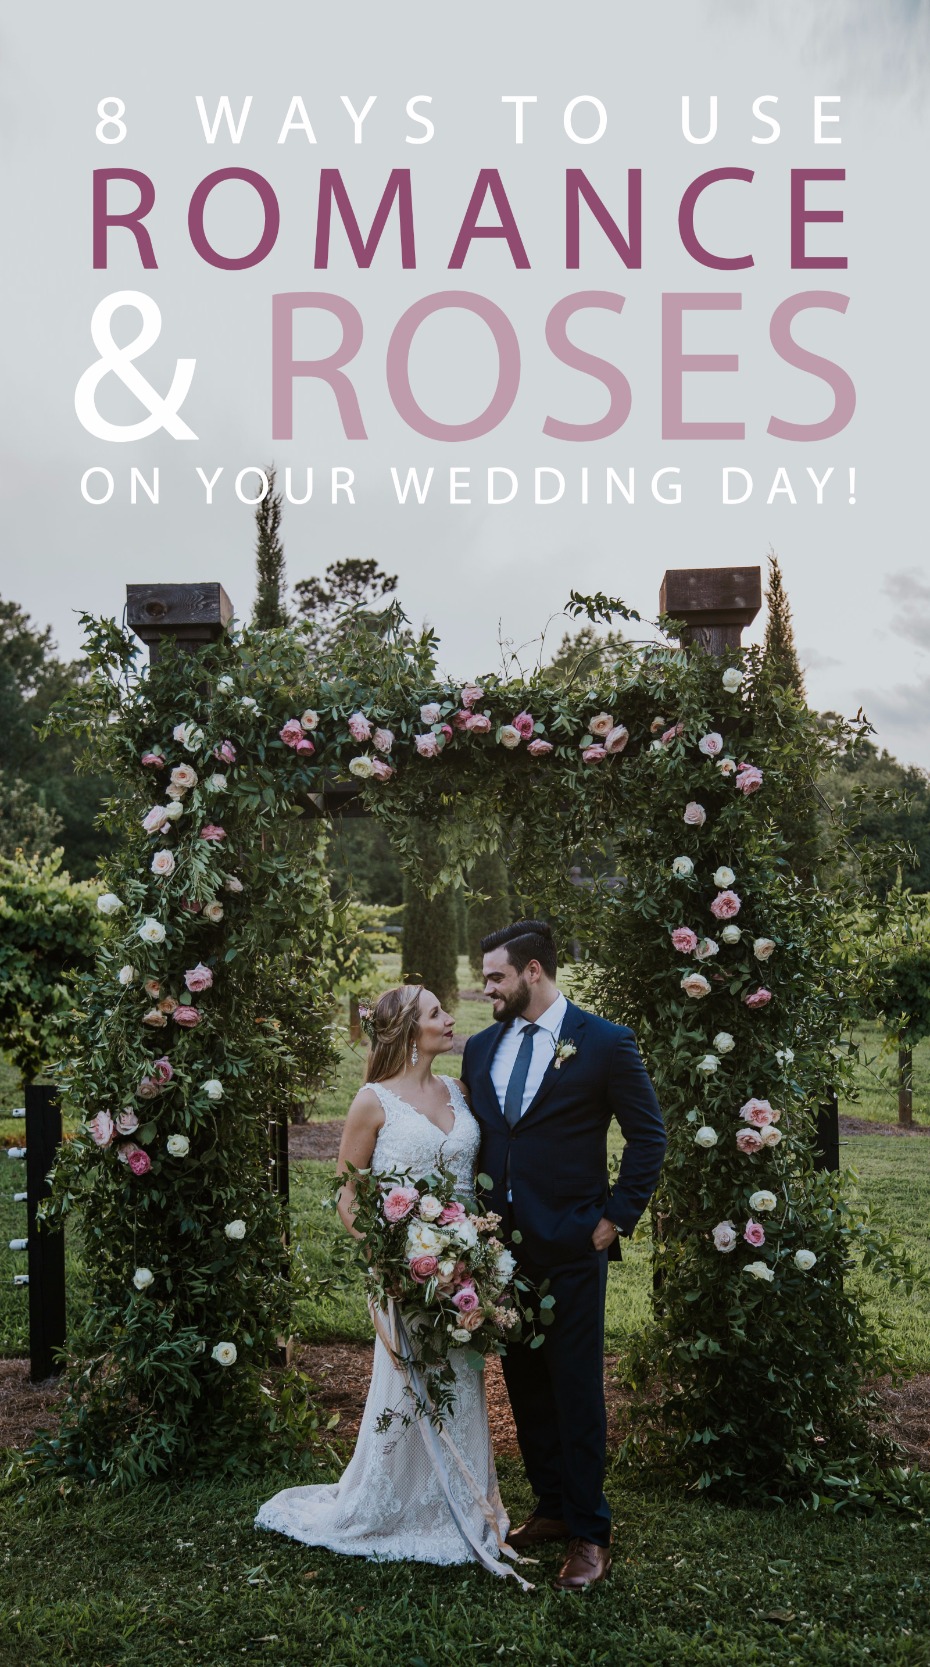 8 ways to use romance roses on your wedding